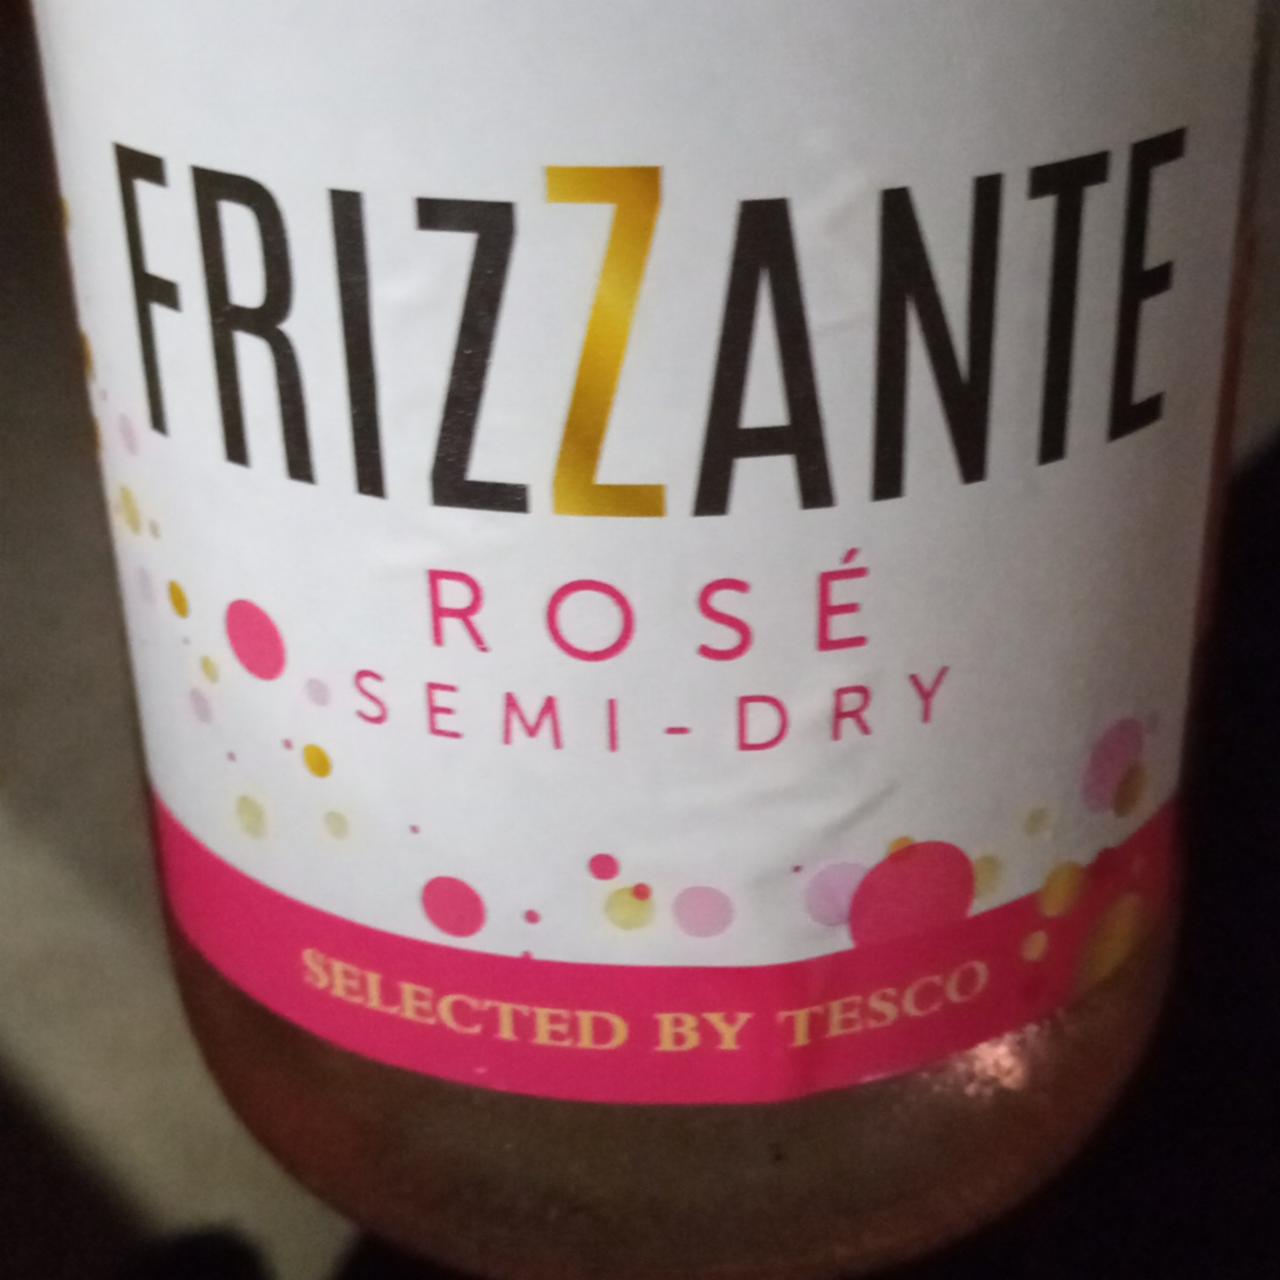 Fotografie - Frizzante Rosé Semi - Dry Tesco